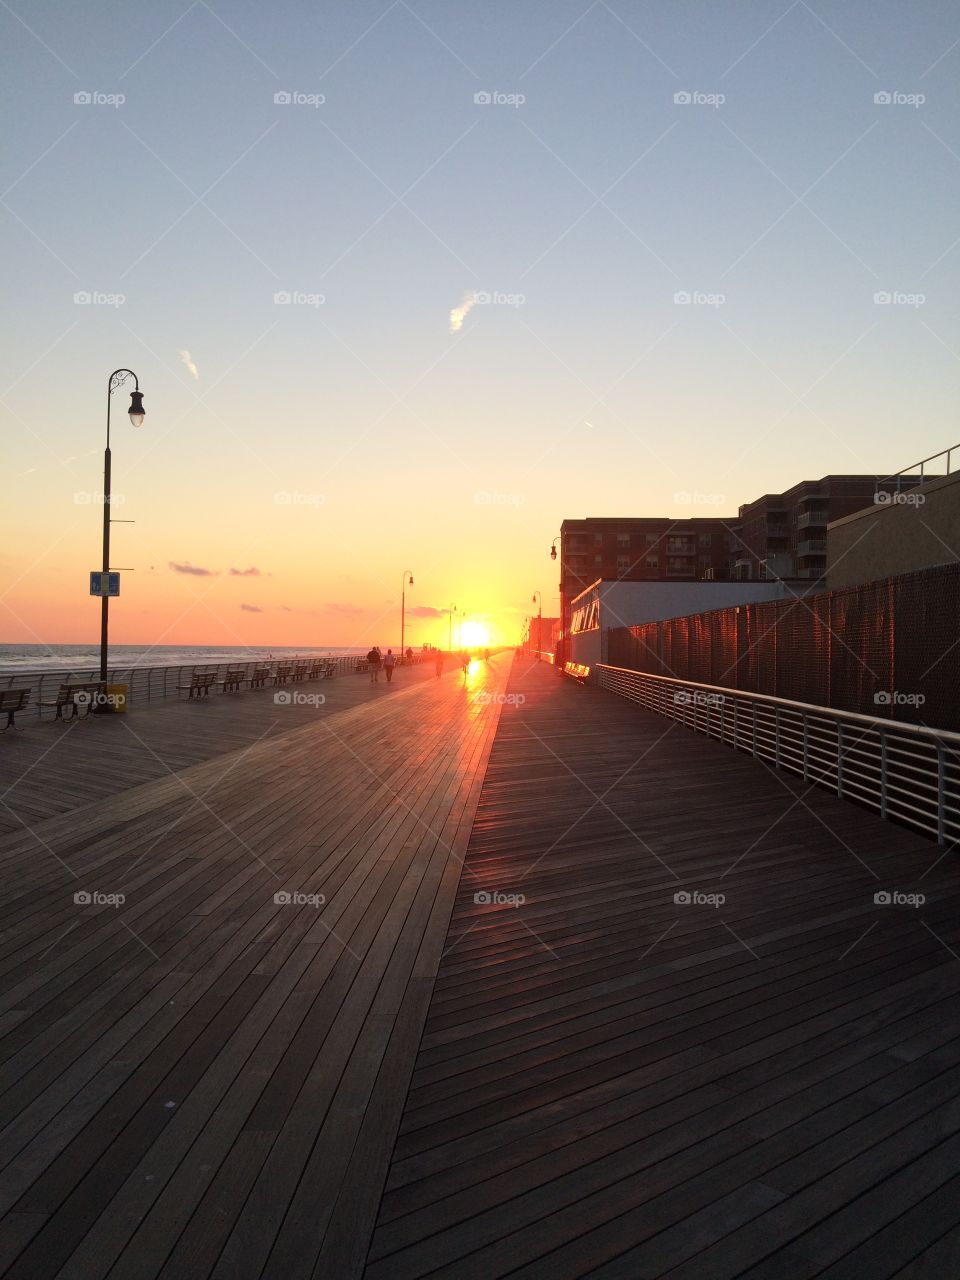 Sunset at LongBeach boardwalk in NY. 